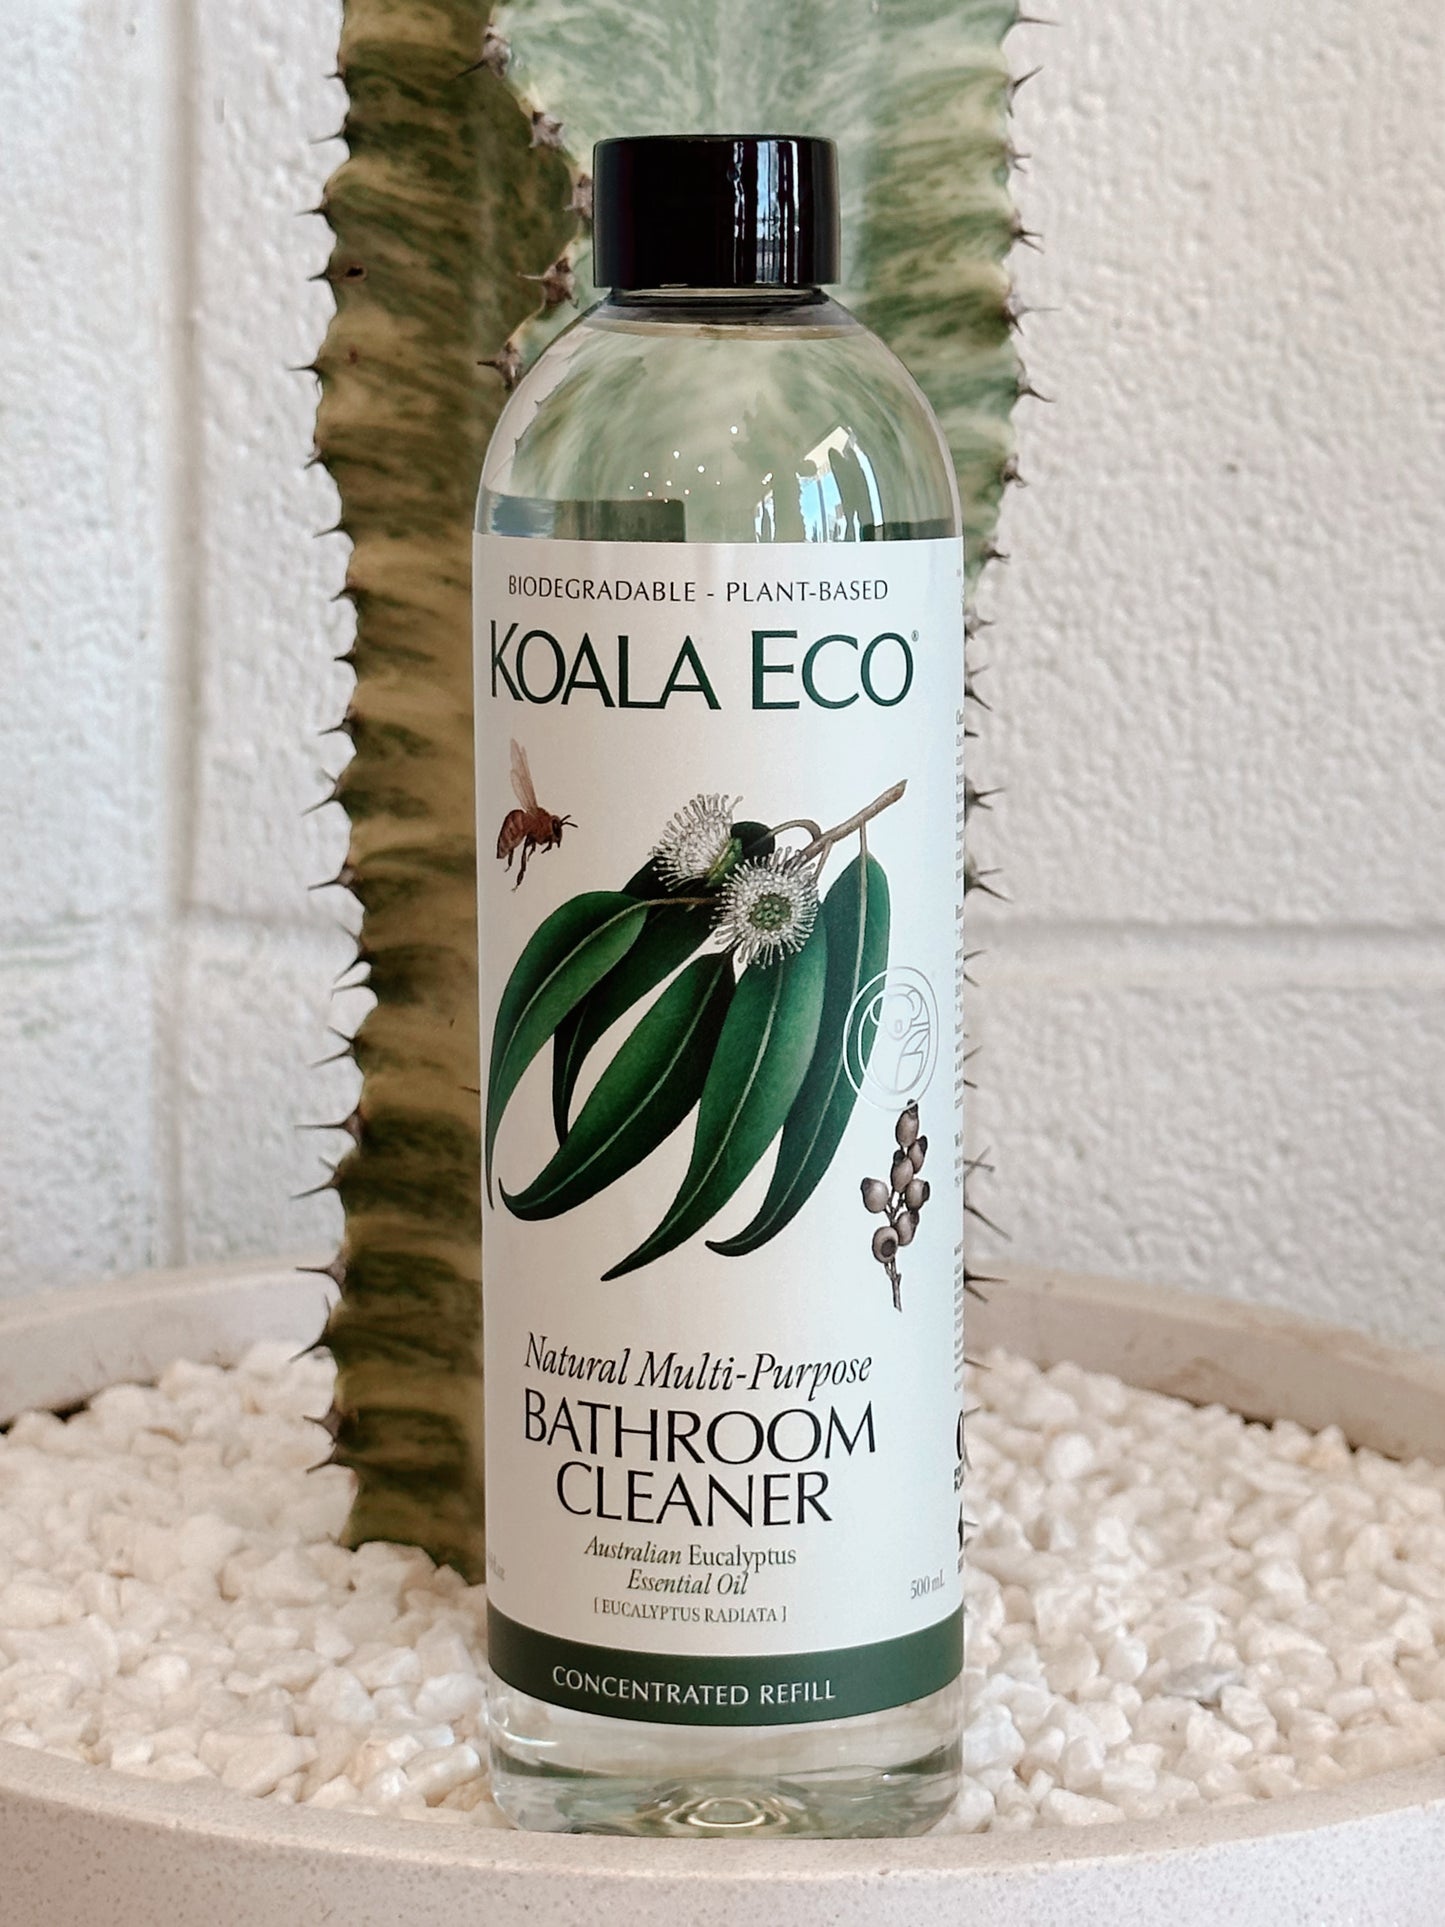 Koala Eco: Natural Multi-Purpose Bathroom Cleaner